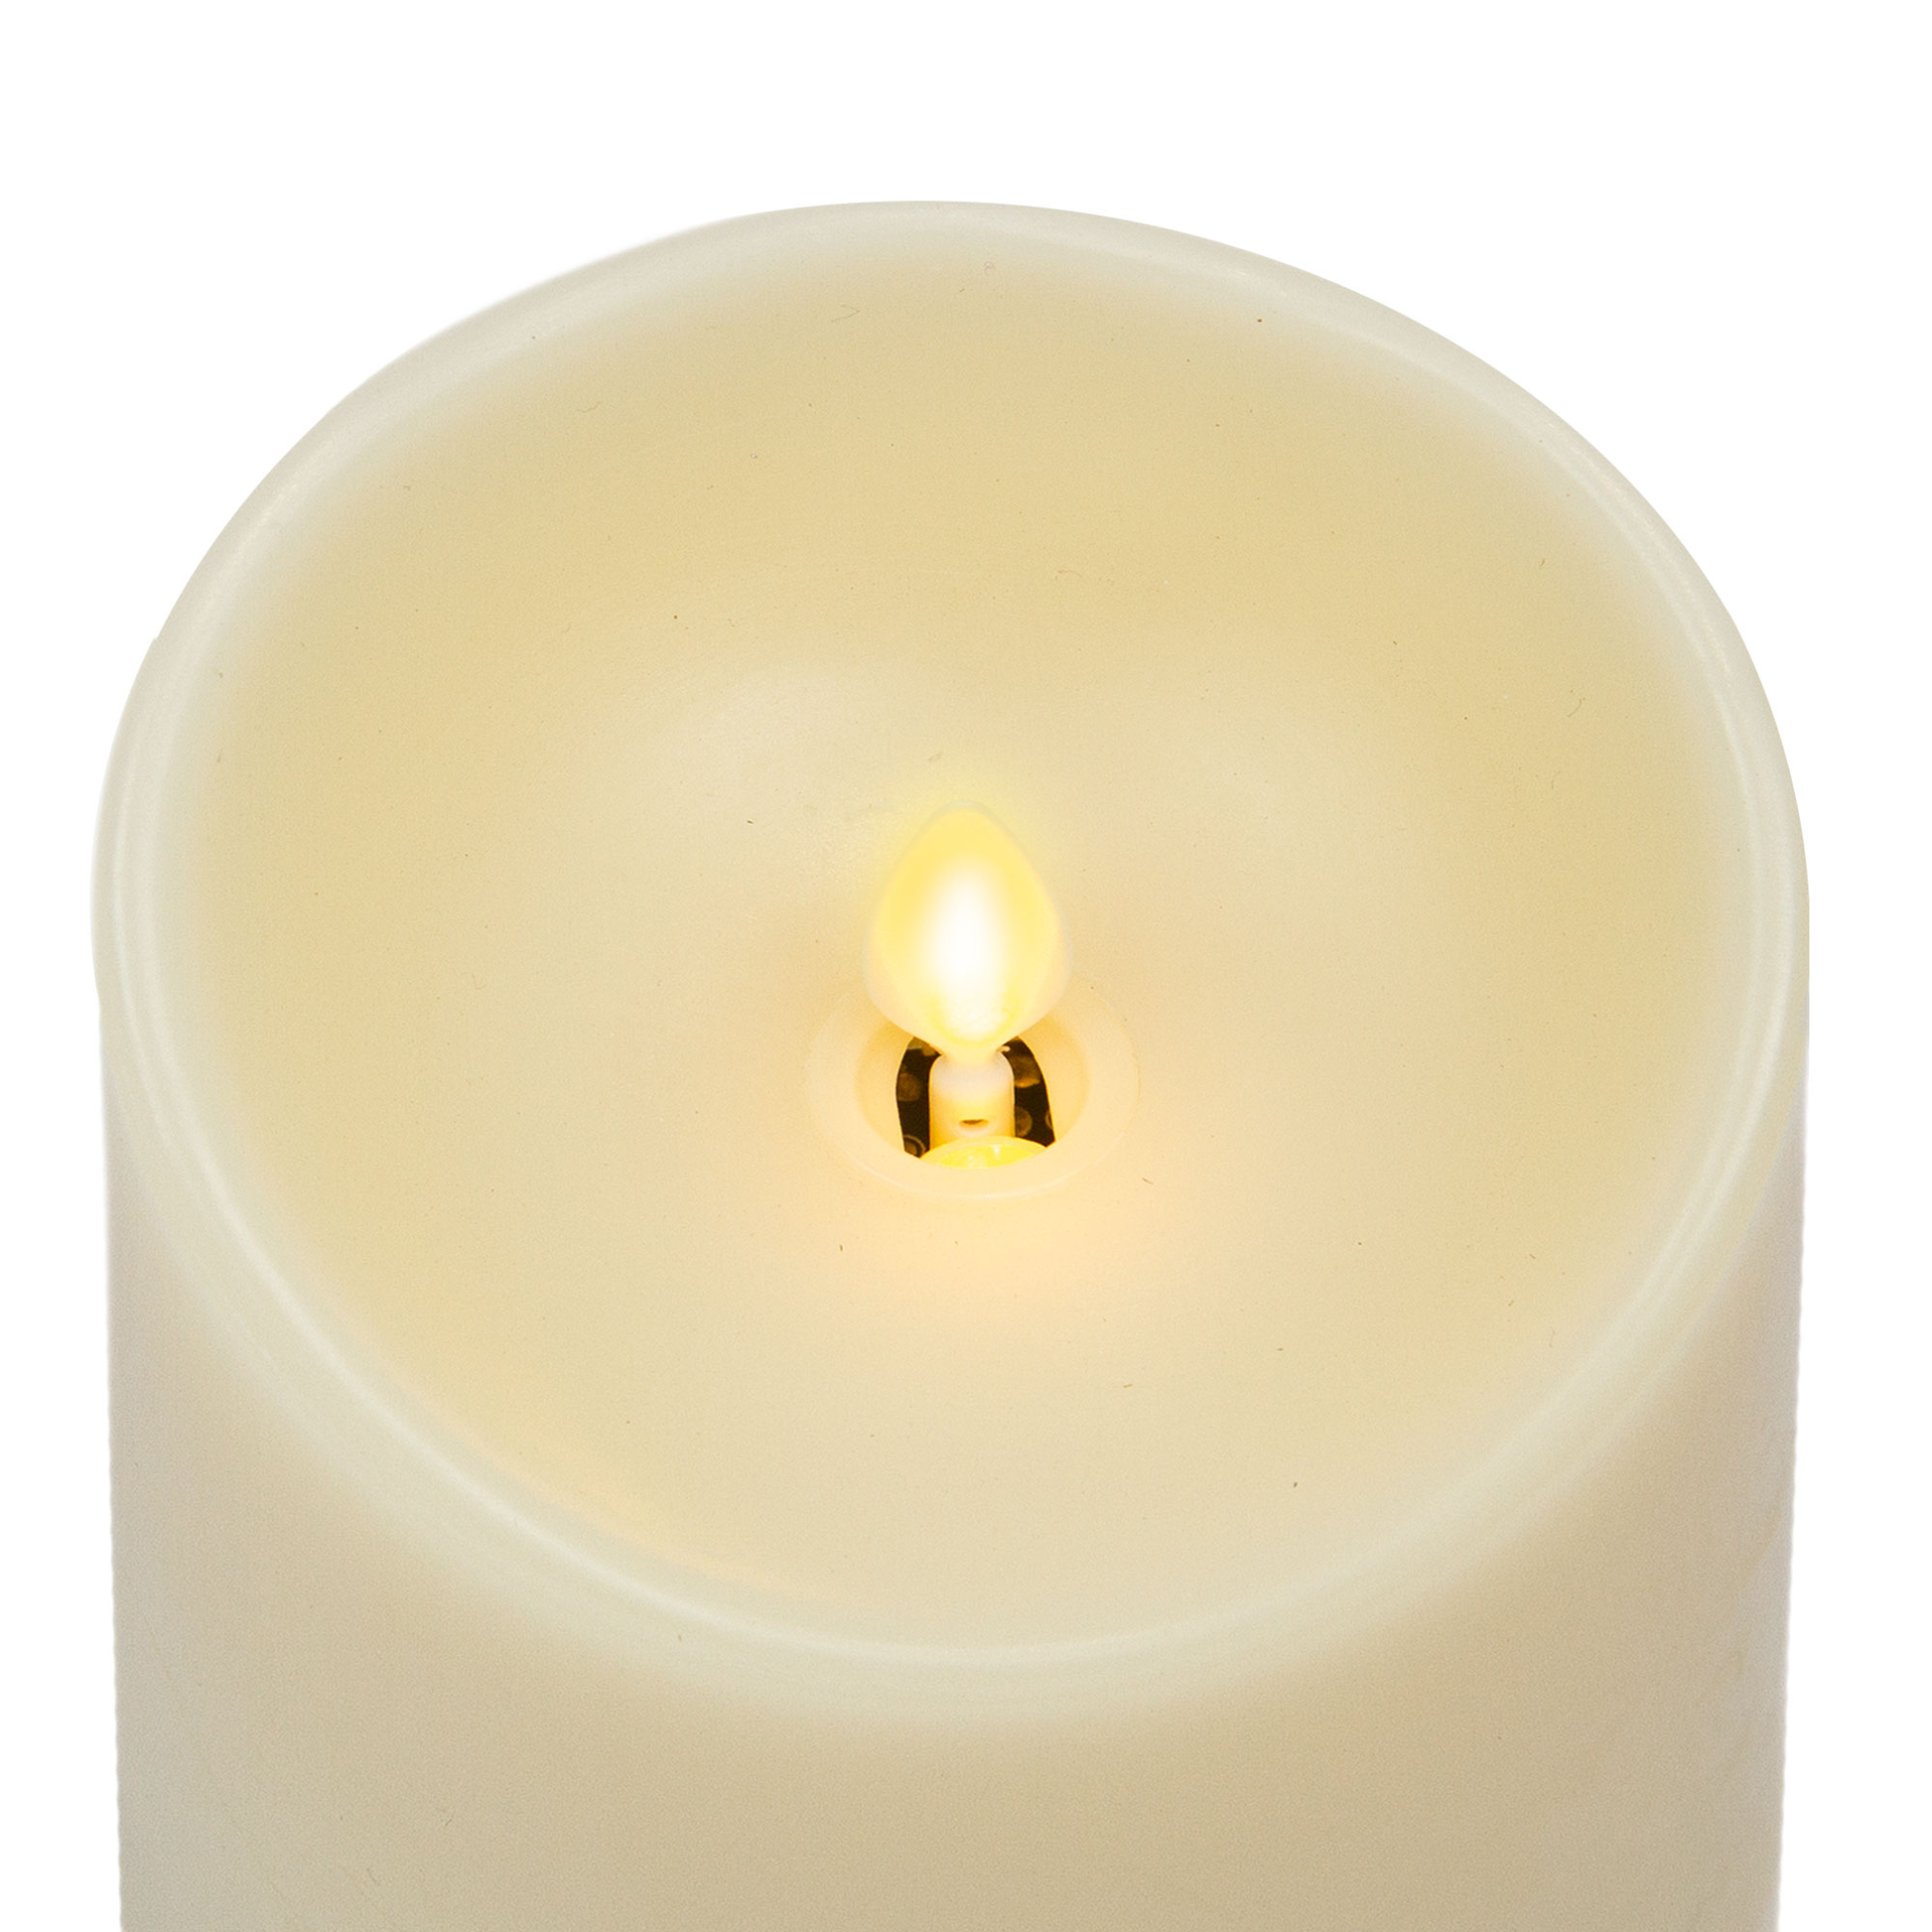 an image of Luminara's vanilla scented flameless candles